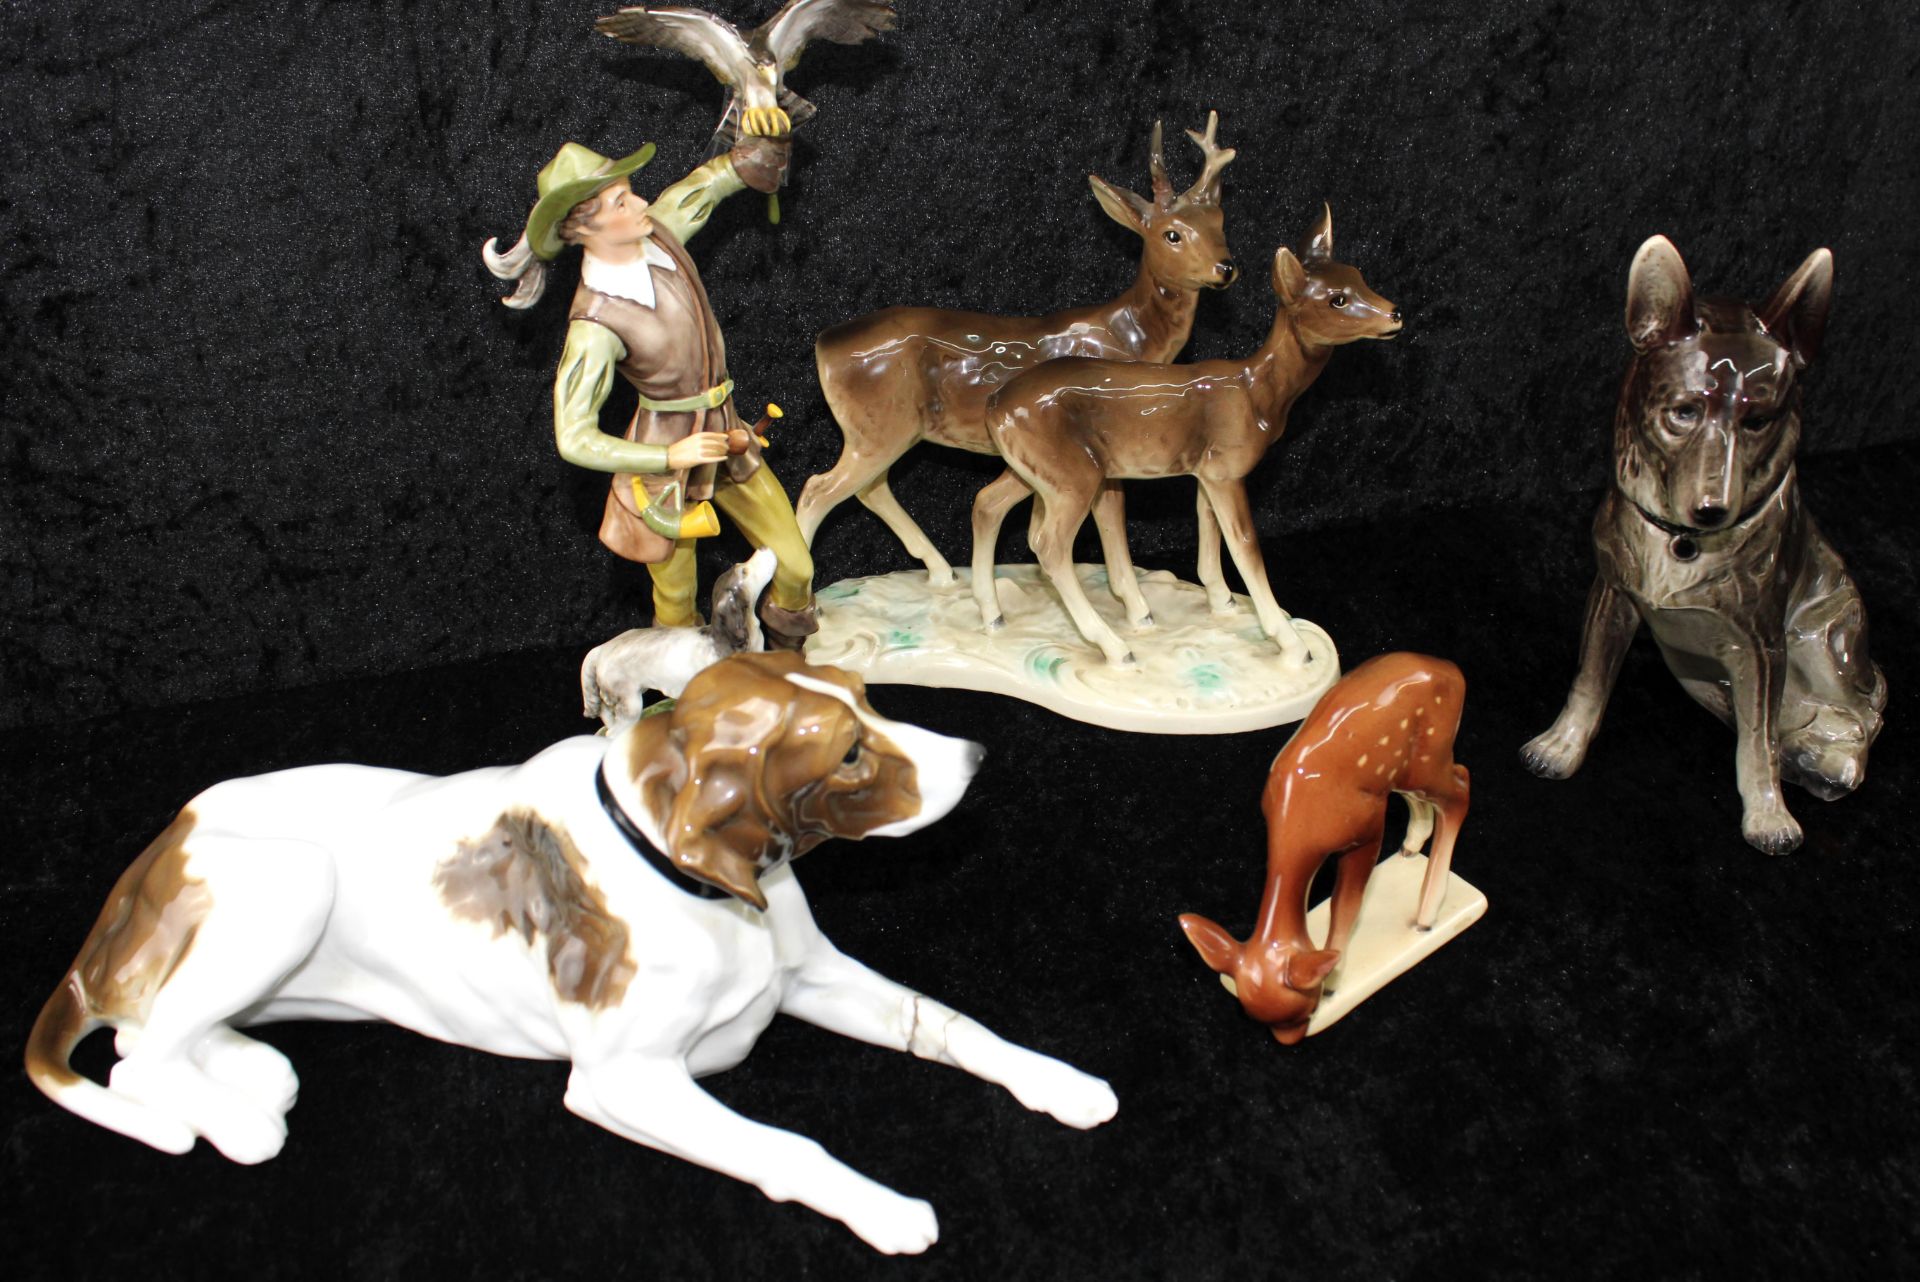 Jagdliche Keramik- und Porzellanfiguren, Falkner, Hunde, Rehe - Image 3 of 3